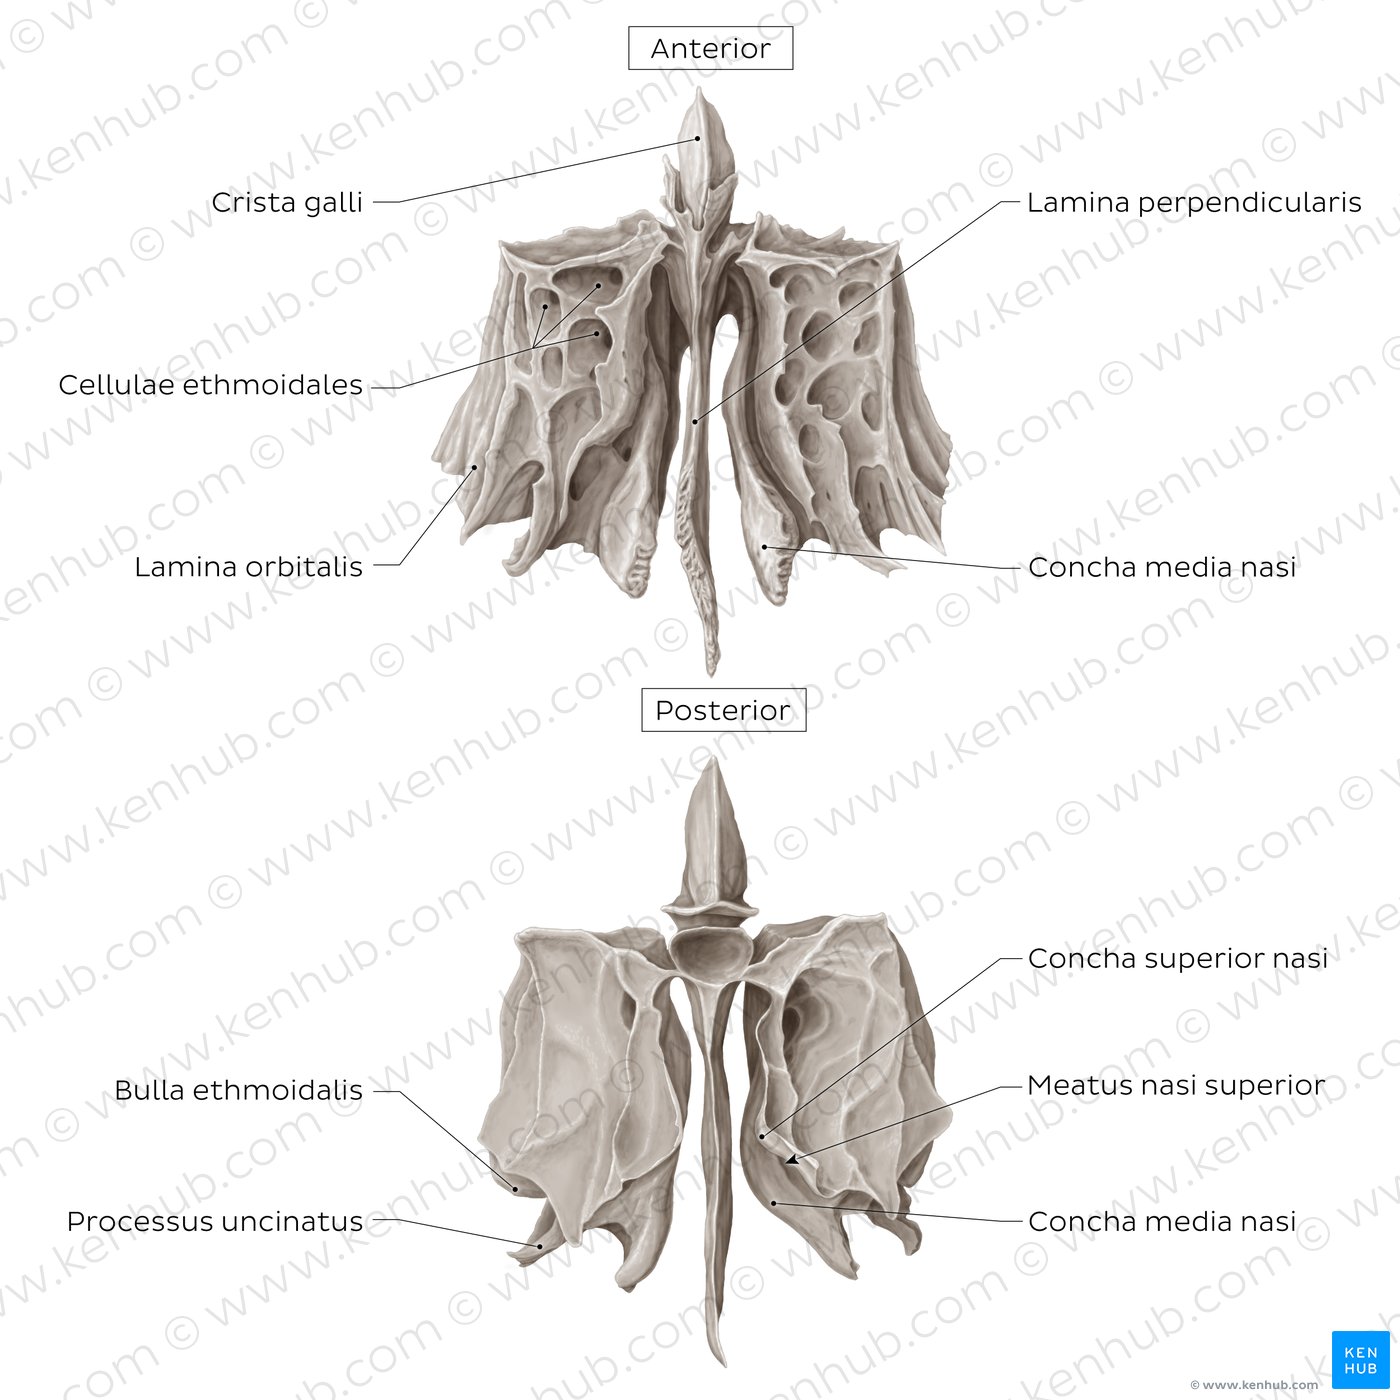 Os ethmoidale (anterior and posterior views)